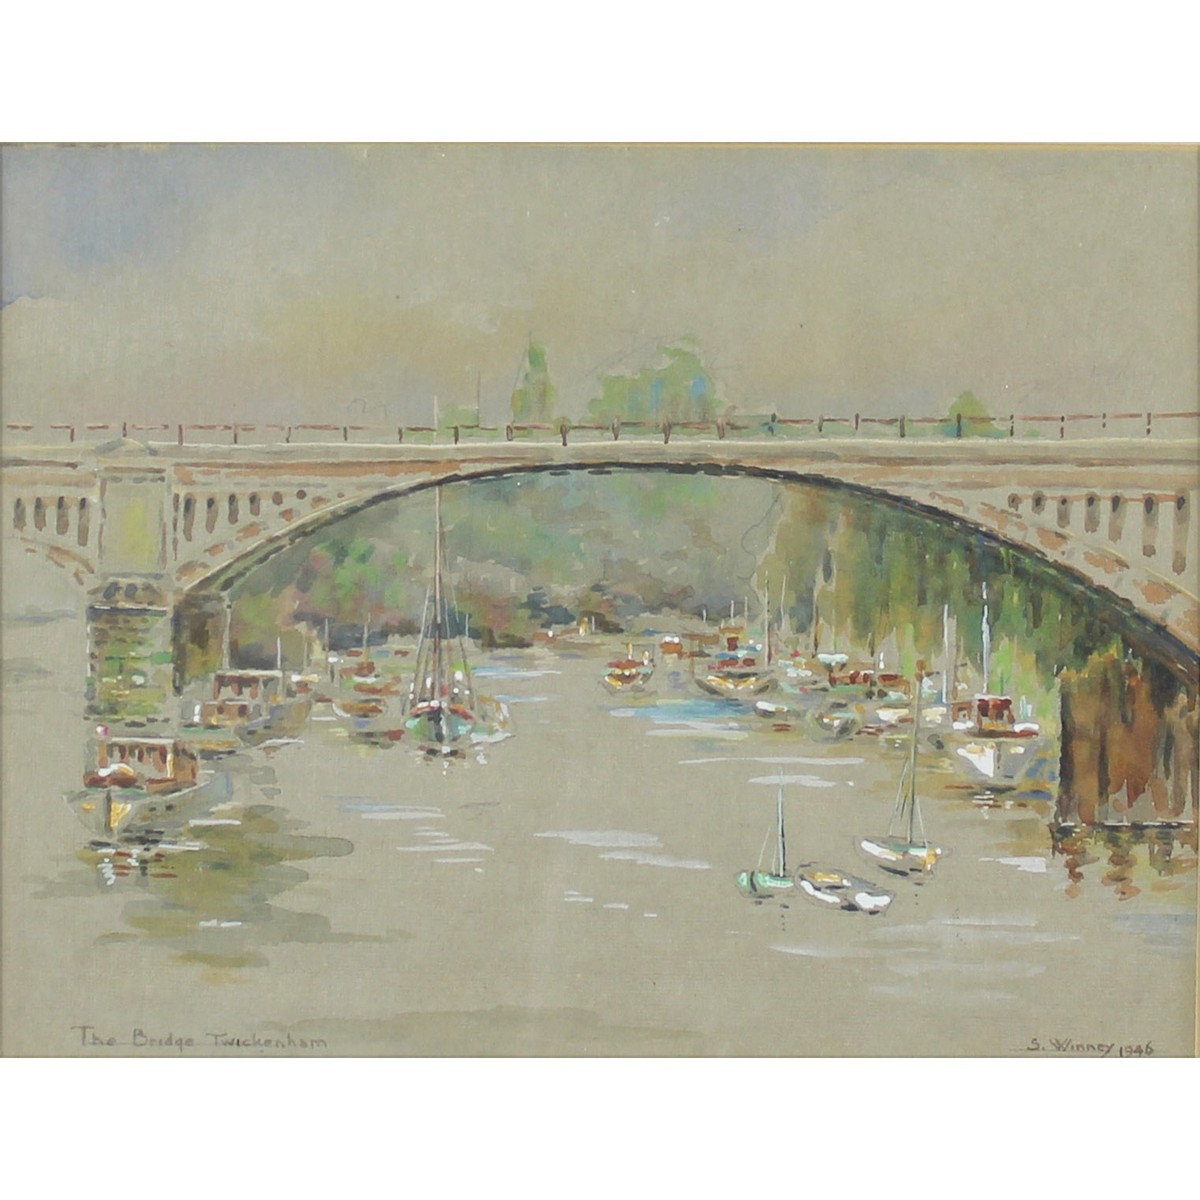 Winney, S Twentieth Century British, AR, The Bridge in Twickenham.